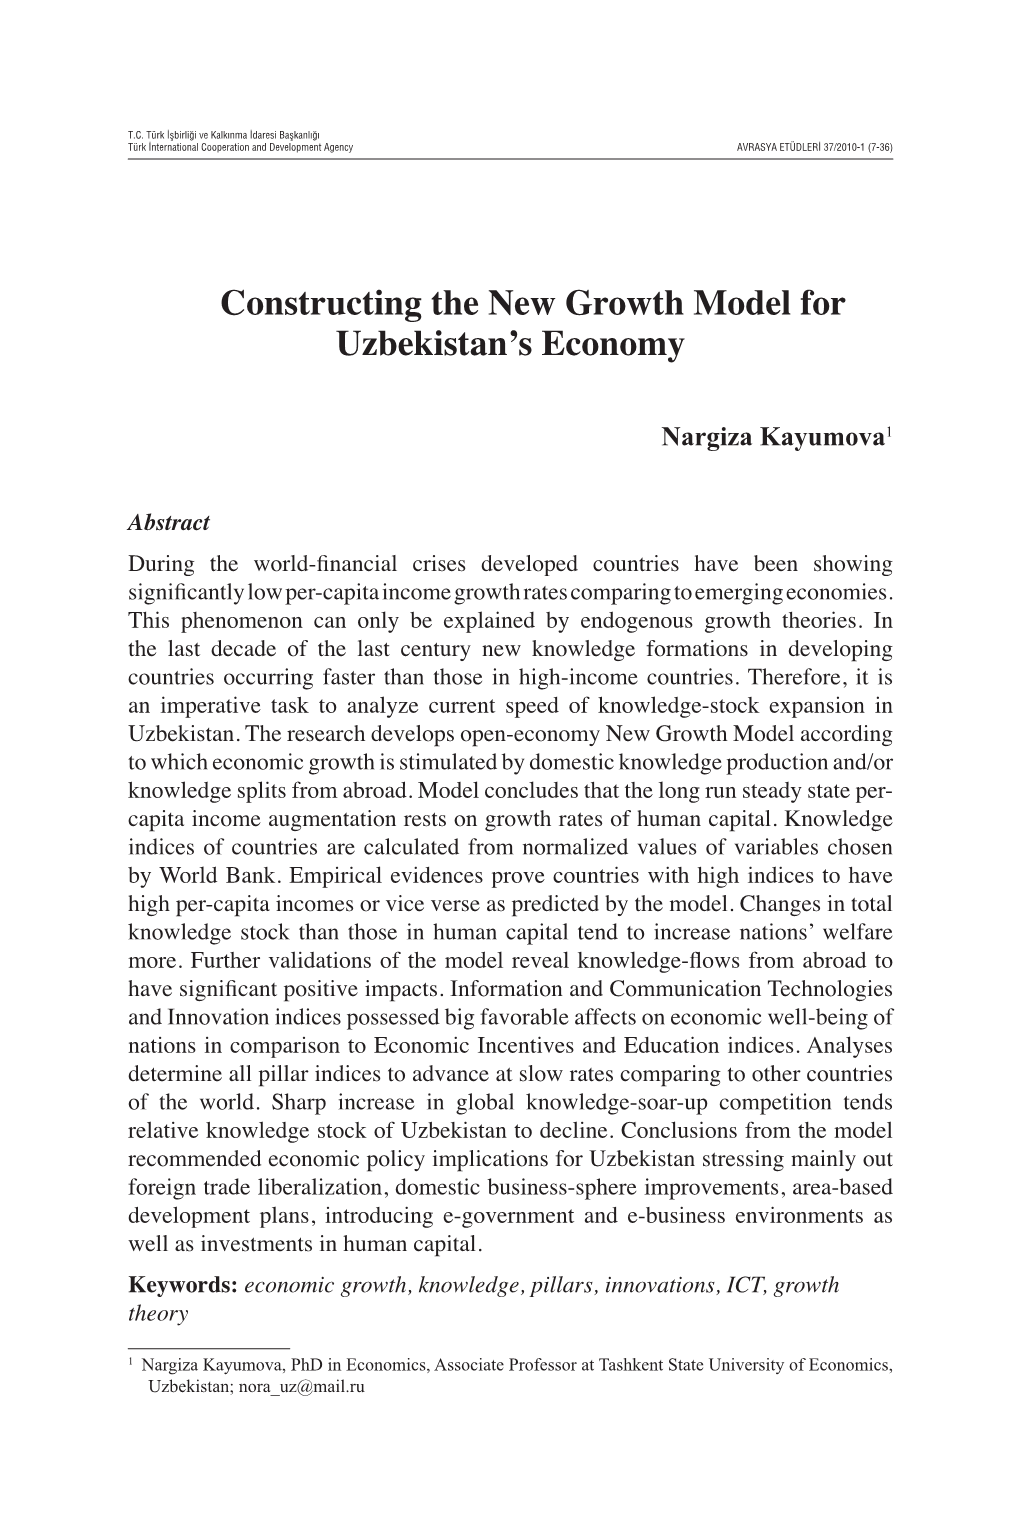 Constructing the New Growth Model for Uzbekistan's Economy